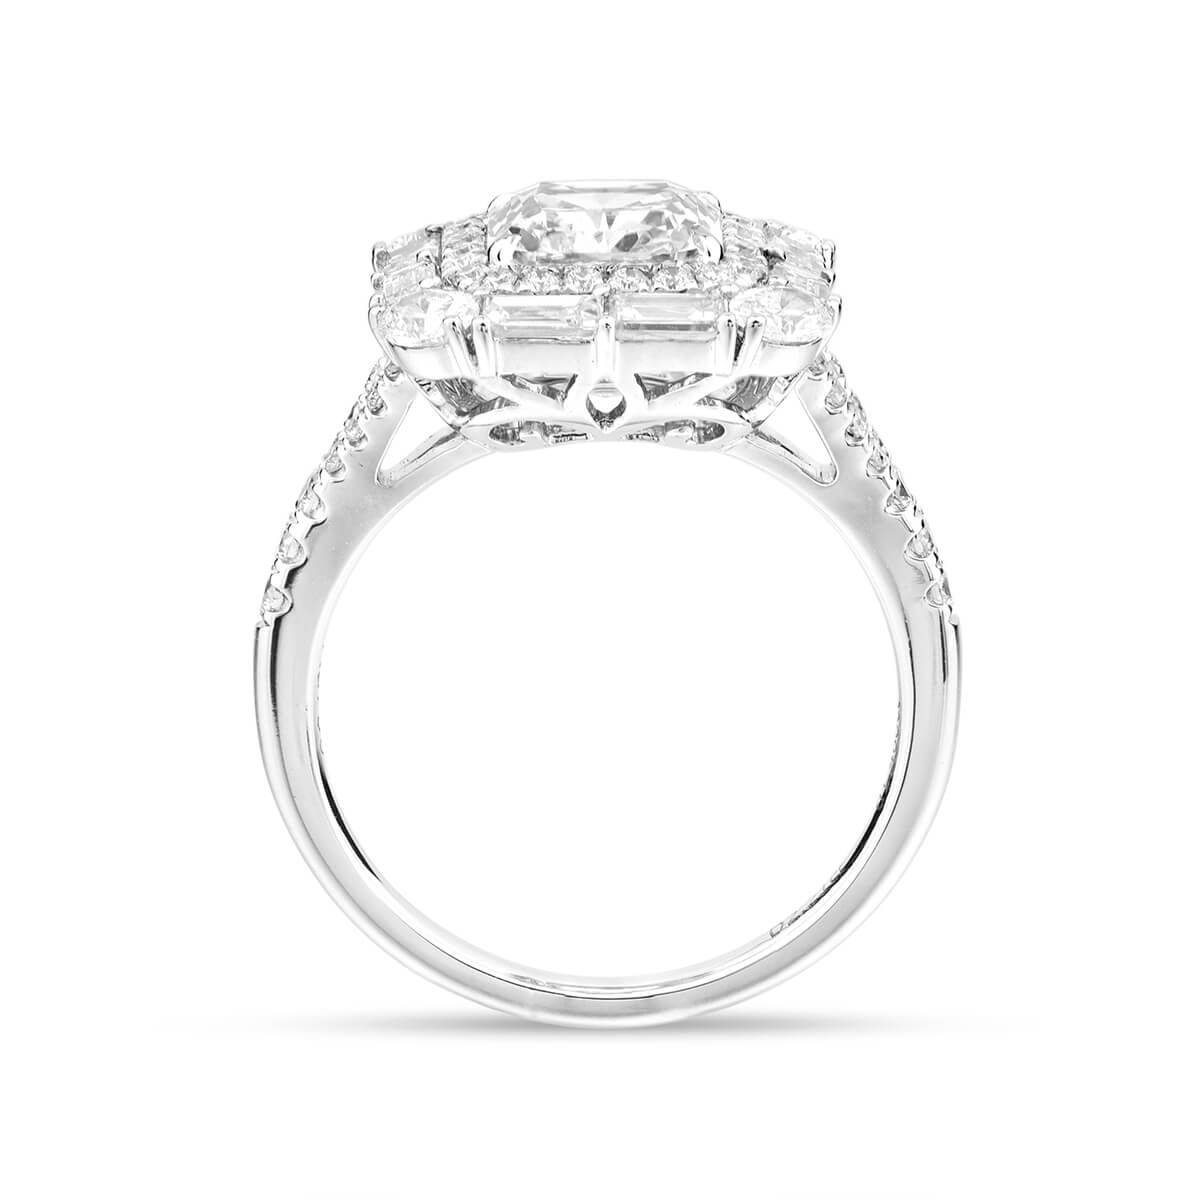  White Diamond Ring, 2.21 Ct. (3.67 Ct. TW), Radiant shape, GIA Certified, 3295398207